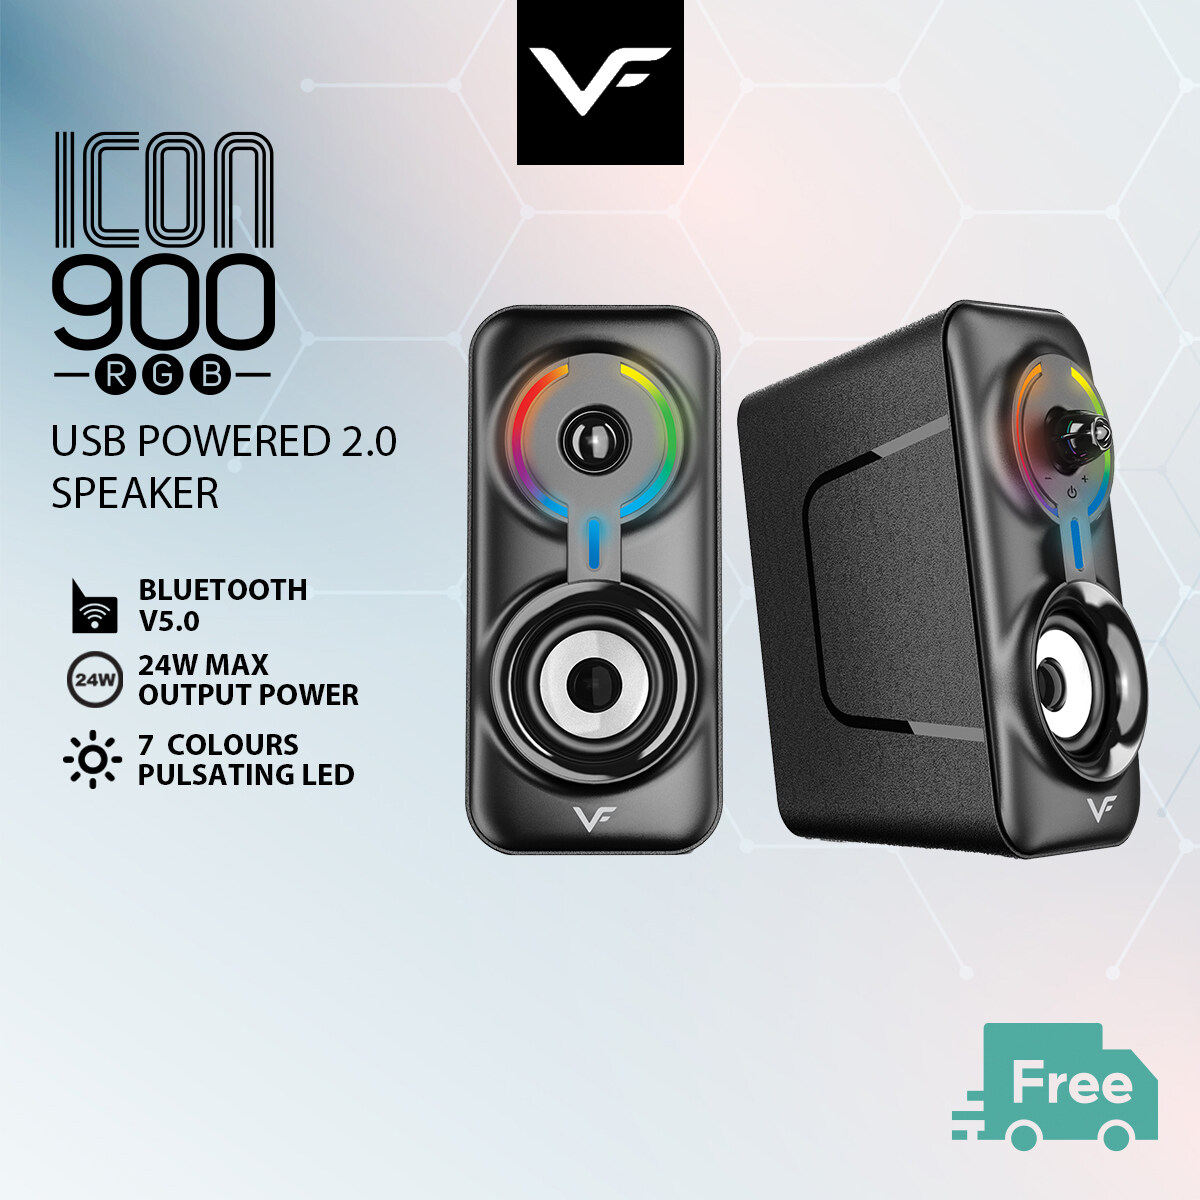 Vinnfier VF Icon 900 RGB Bluetooth USB Speaker with 7 Modes LED Lights Sleek External Controller